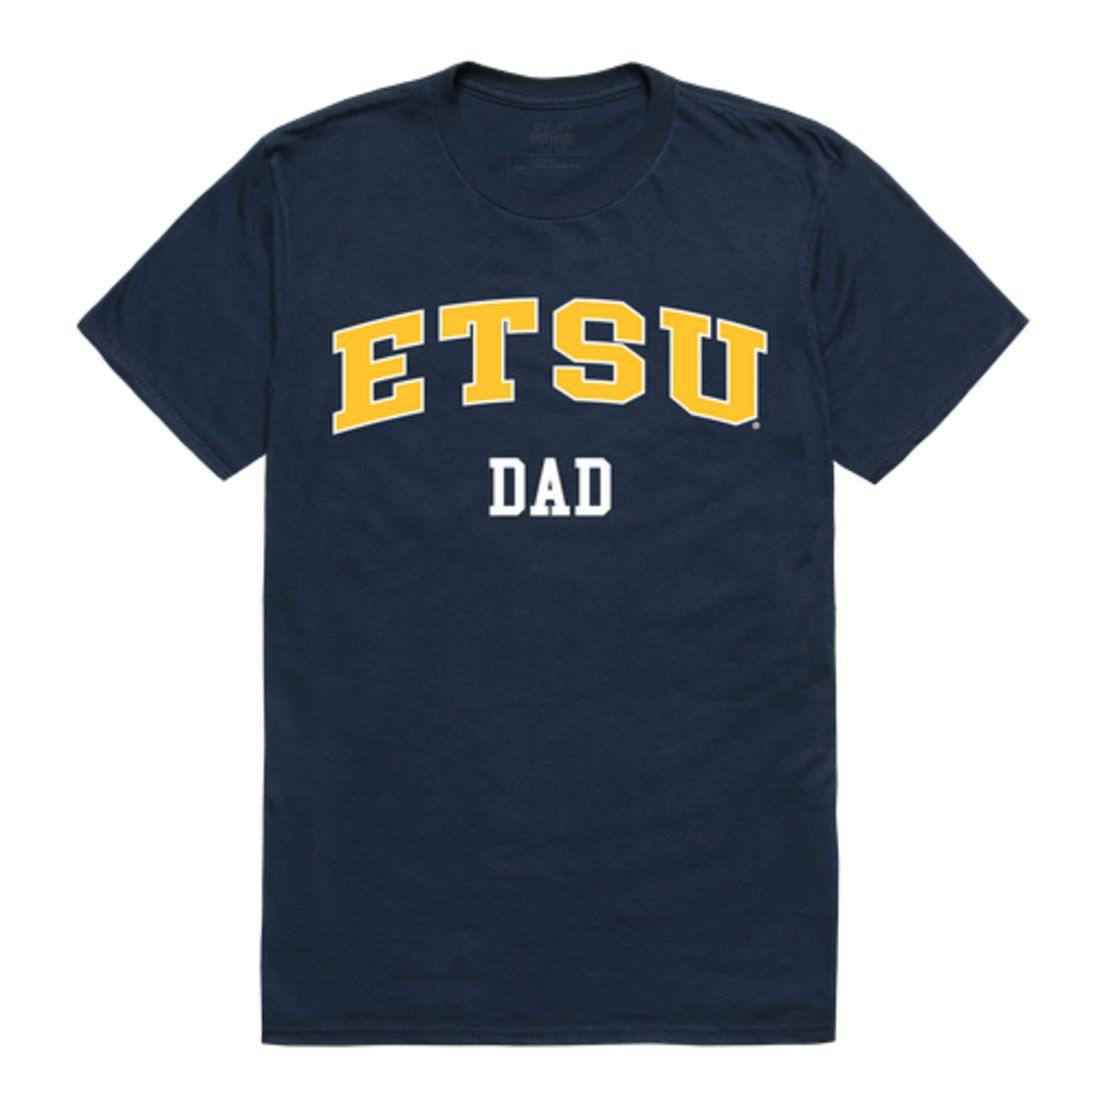 ETSU East Tennessee State University Buccaneers College Dad T-Shirt-Campus-Wardrobe